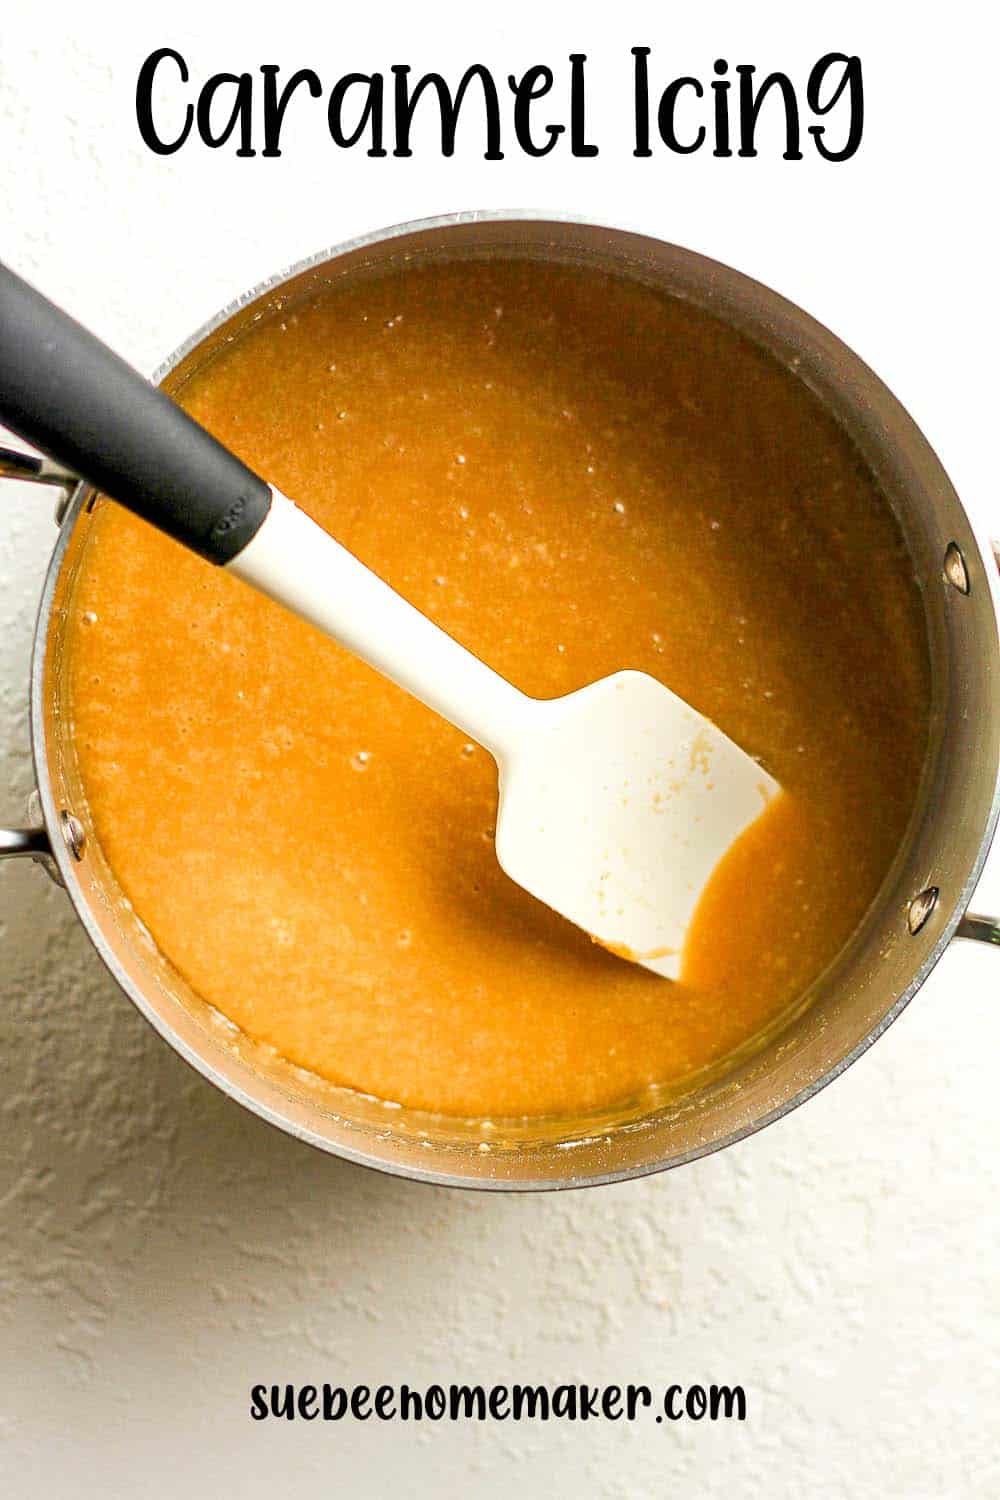 A pan of caramel icing with a spatula.